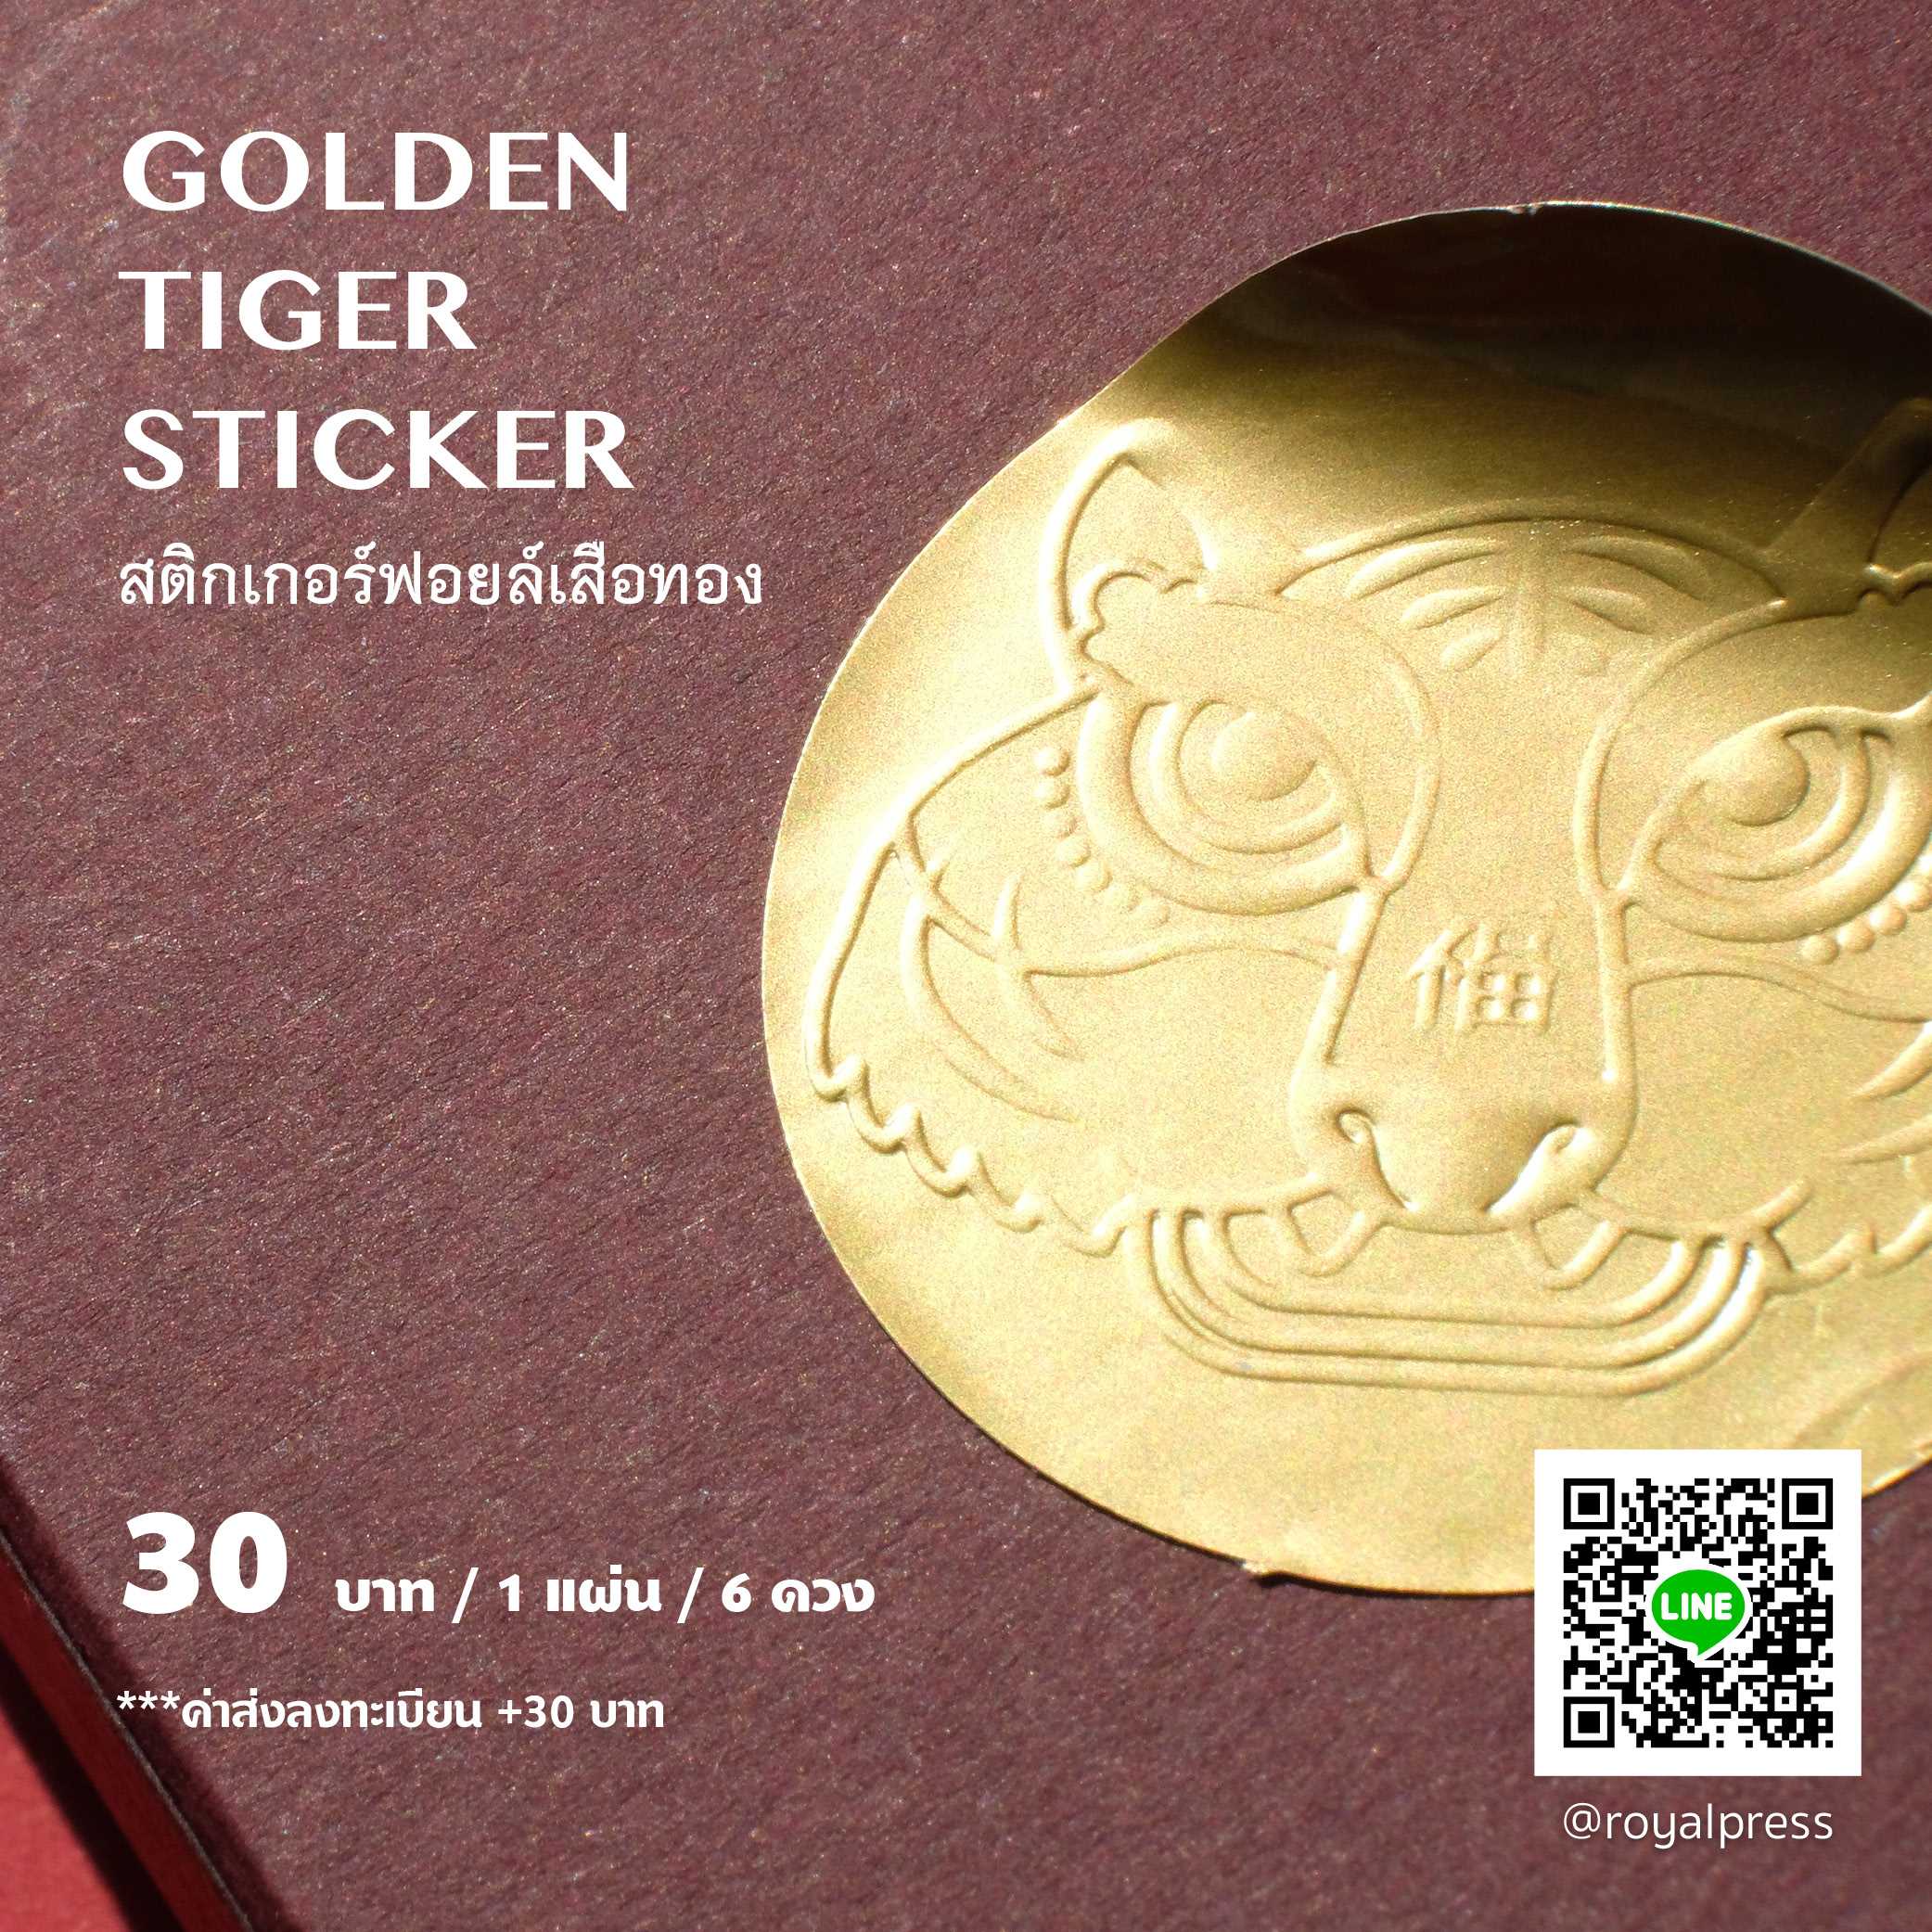 Golder Tiger Sticker - สติกเกอร์ฟอยล์เสือทอง